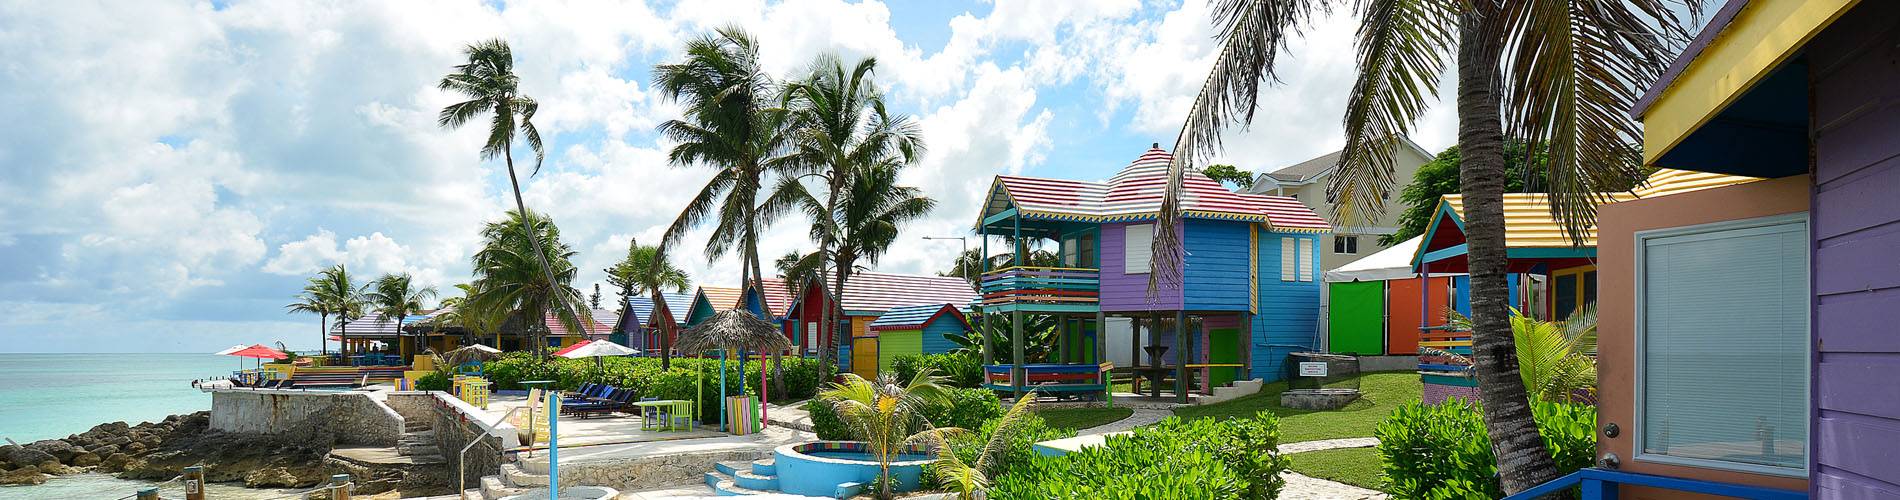 Tauchreise Bahamas | Compass Point Beach Resort | Bunte Bungalows